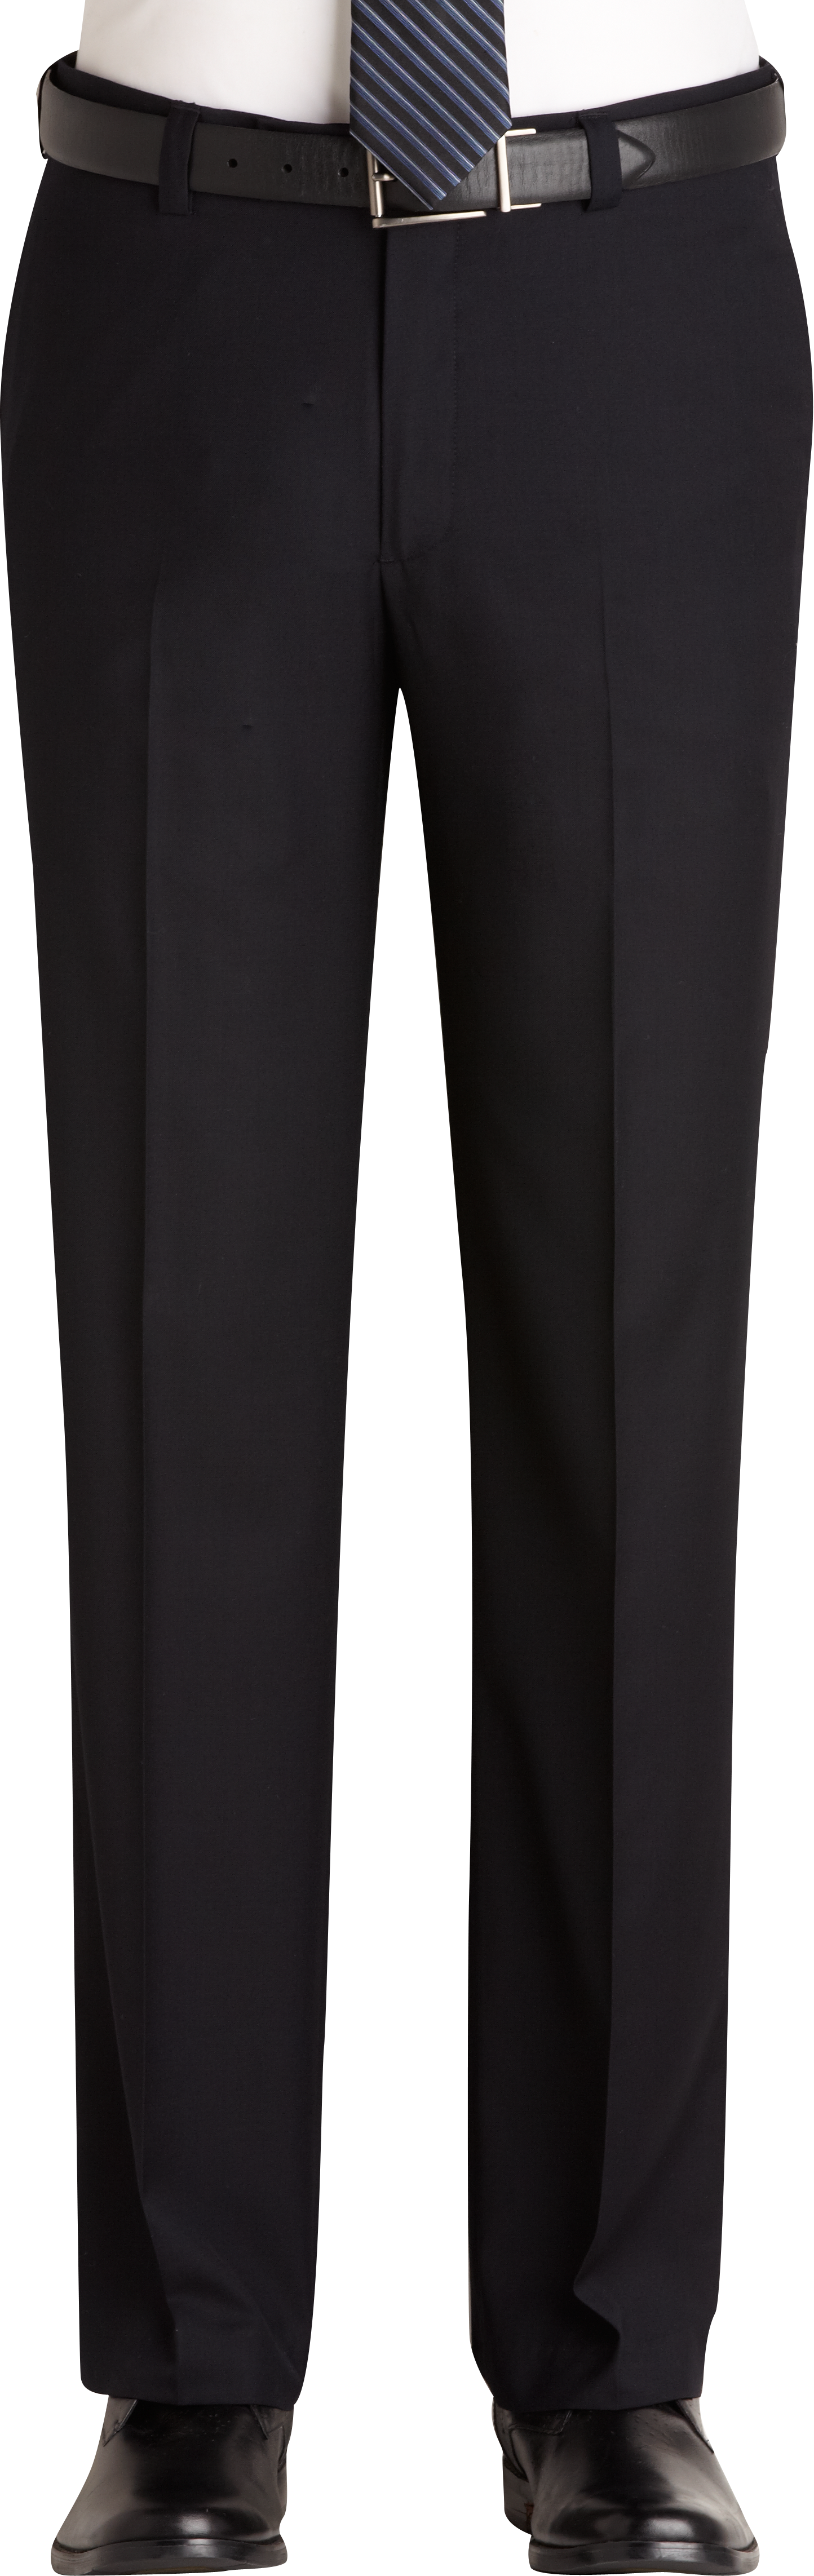 Pronto Uomo Navy Slim Fit Dress Pants - Men's Sale | Men's Wearhouse